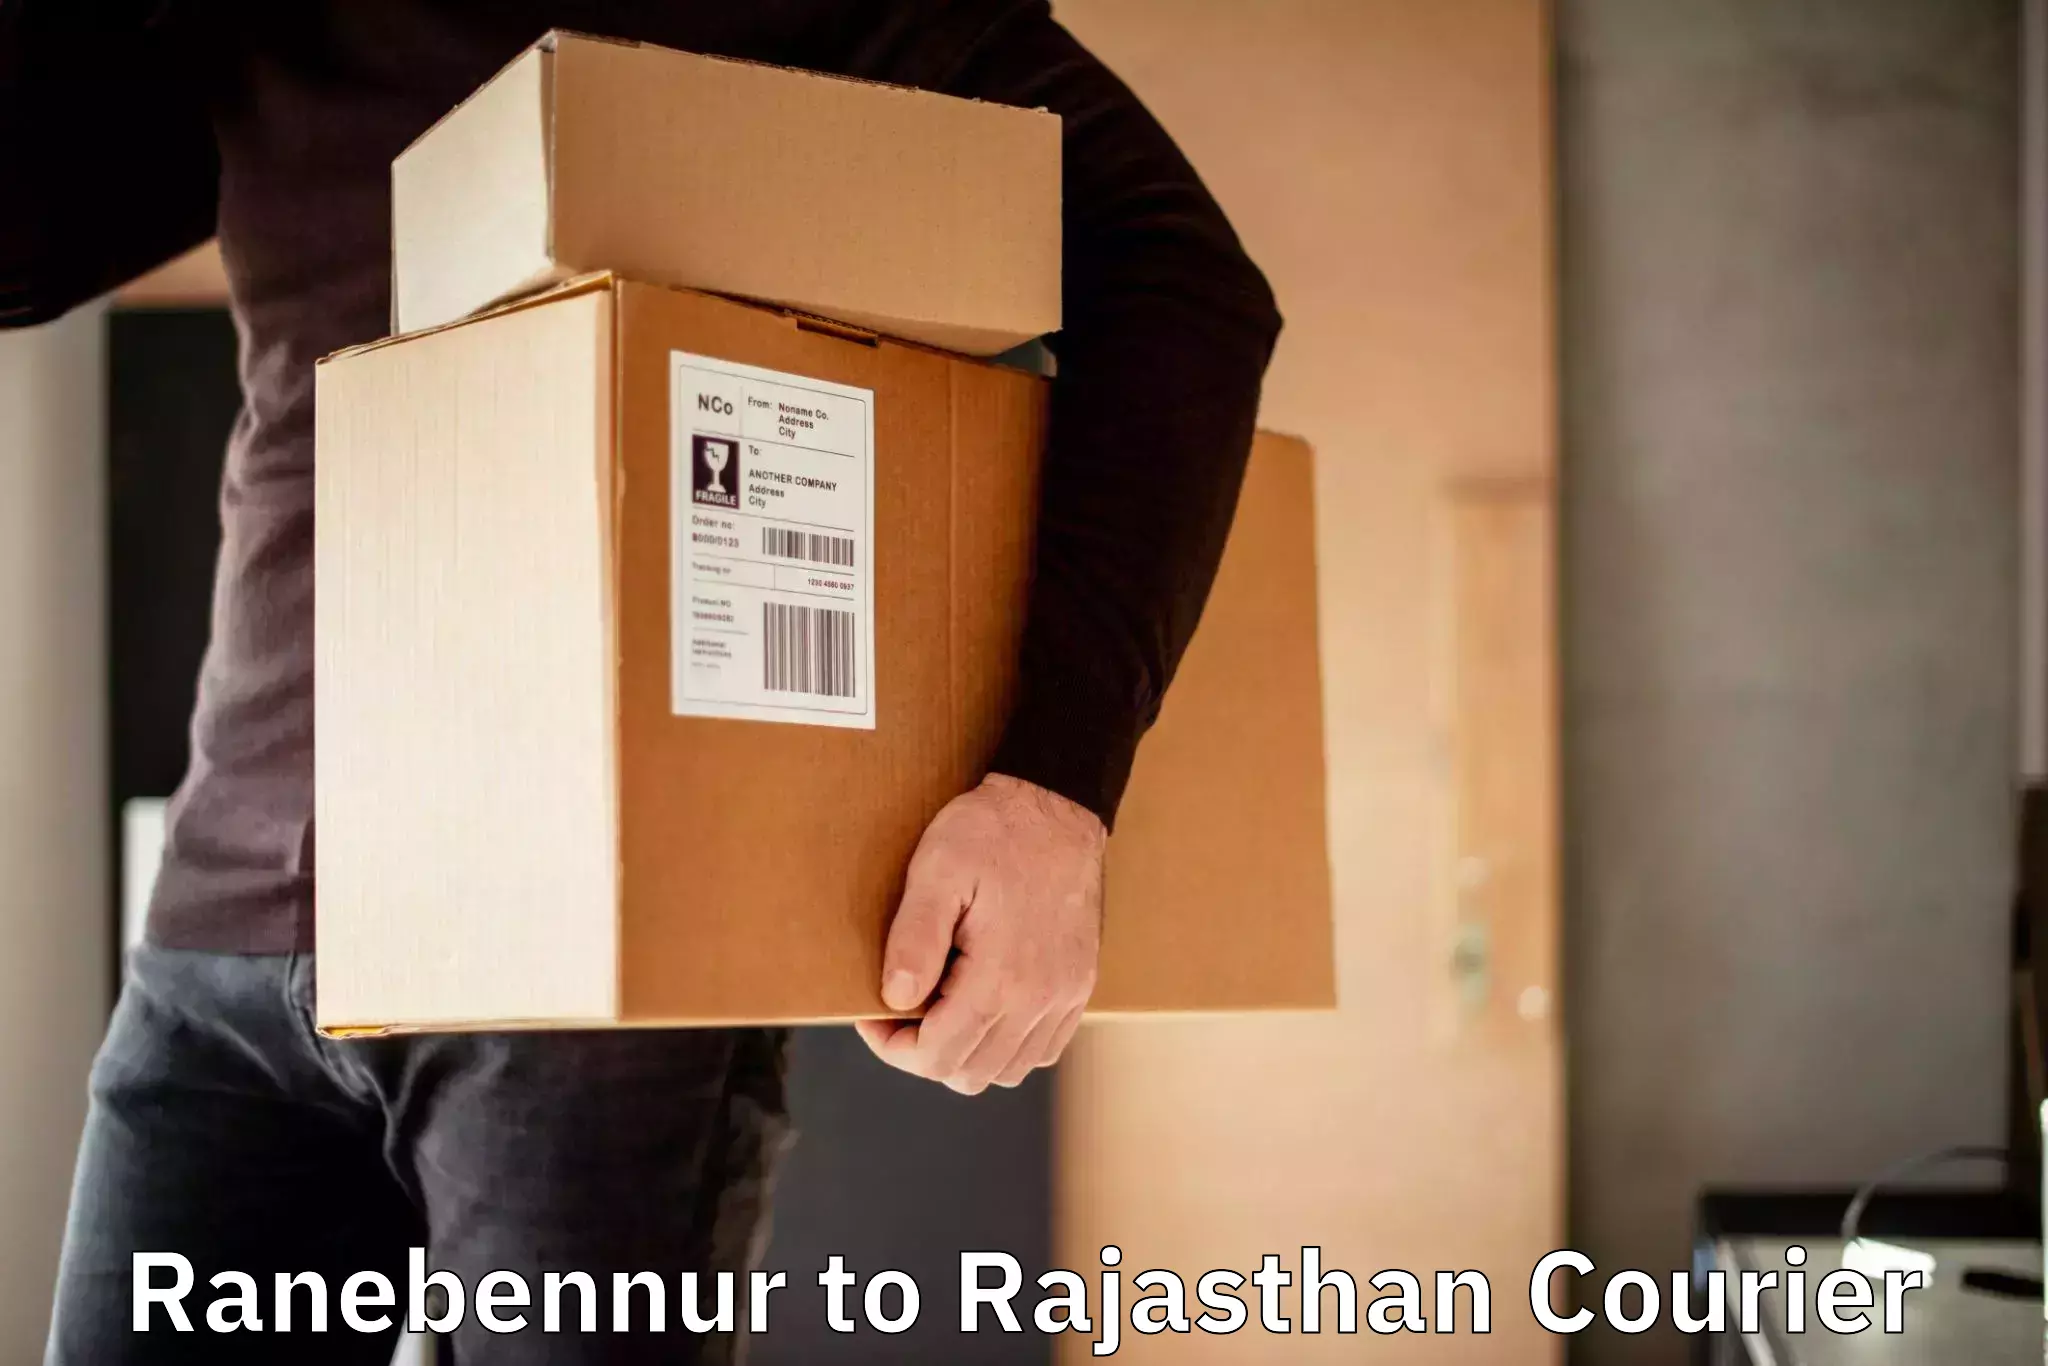 Easy return solutions Ranebennur to Jaipur